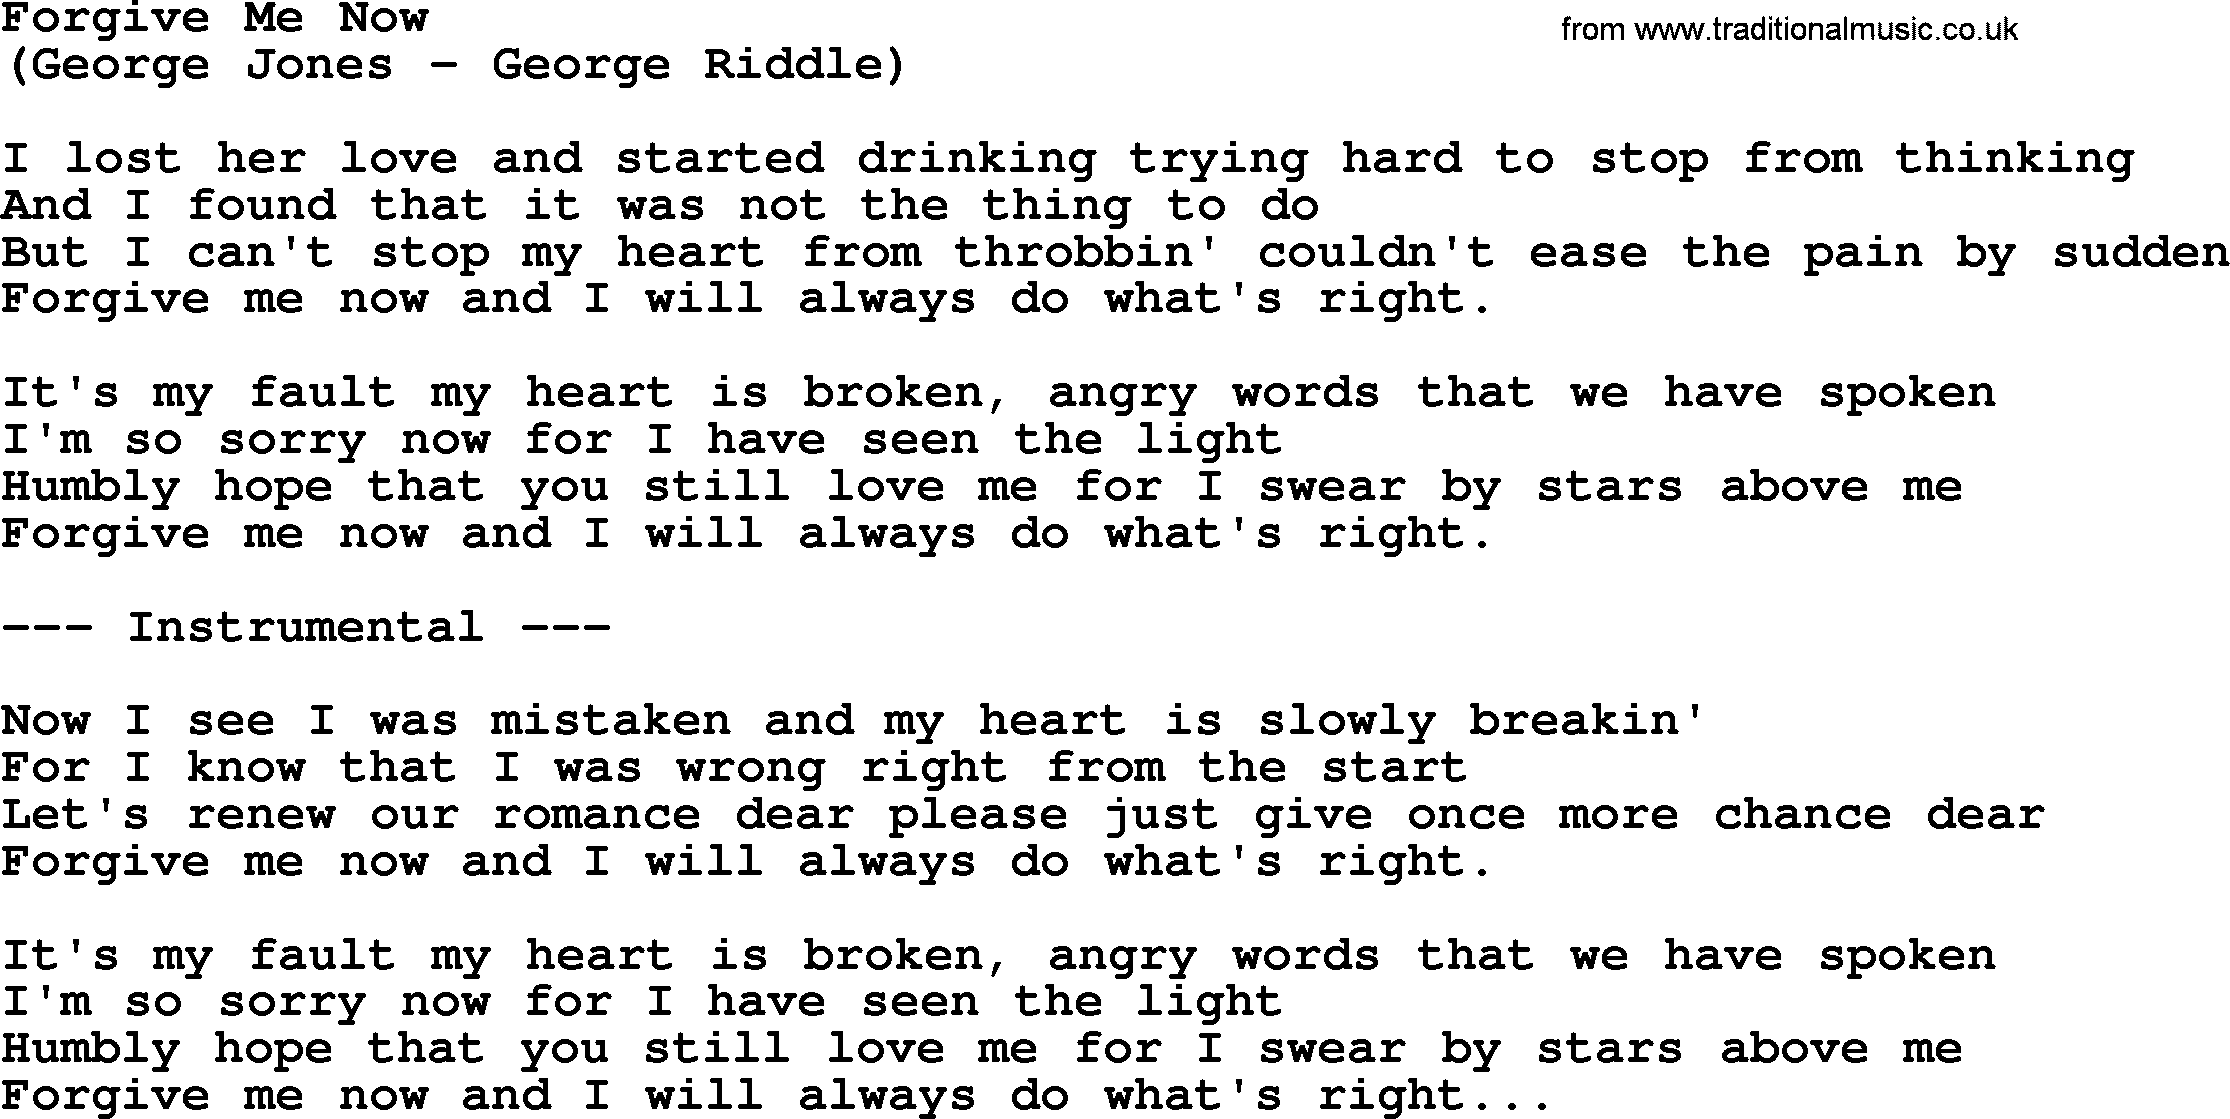 George Jones song: Forgive Me Now, lyrics